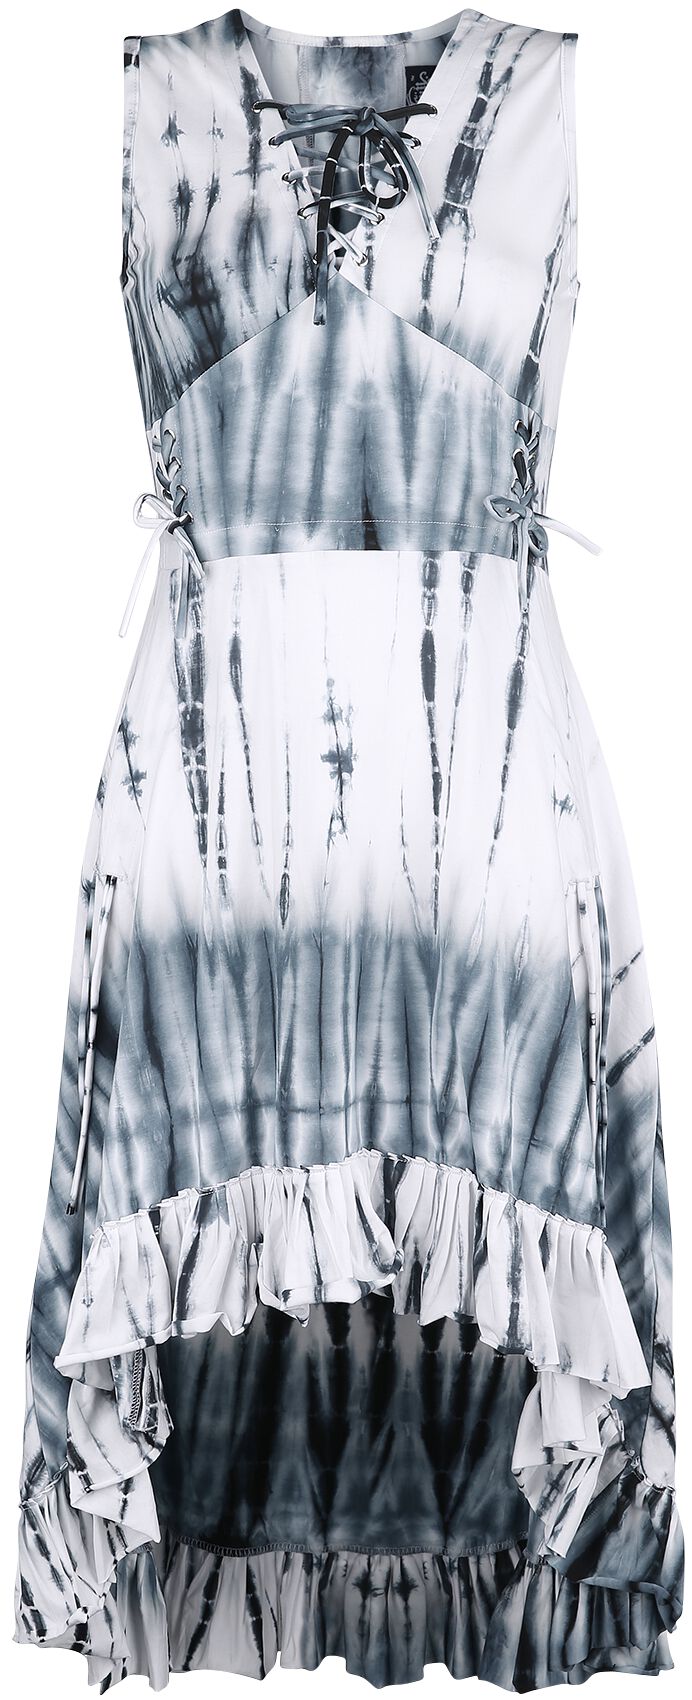 Vixxsin Soleil Dress Medium-length dress white grey